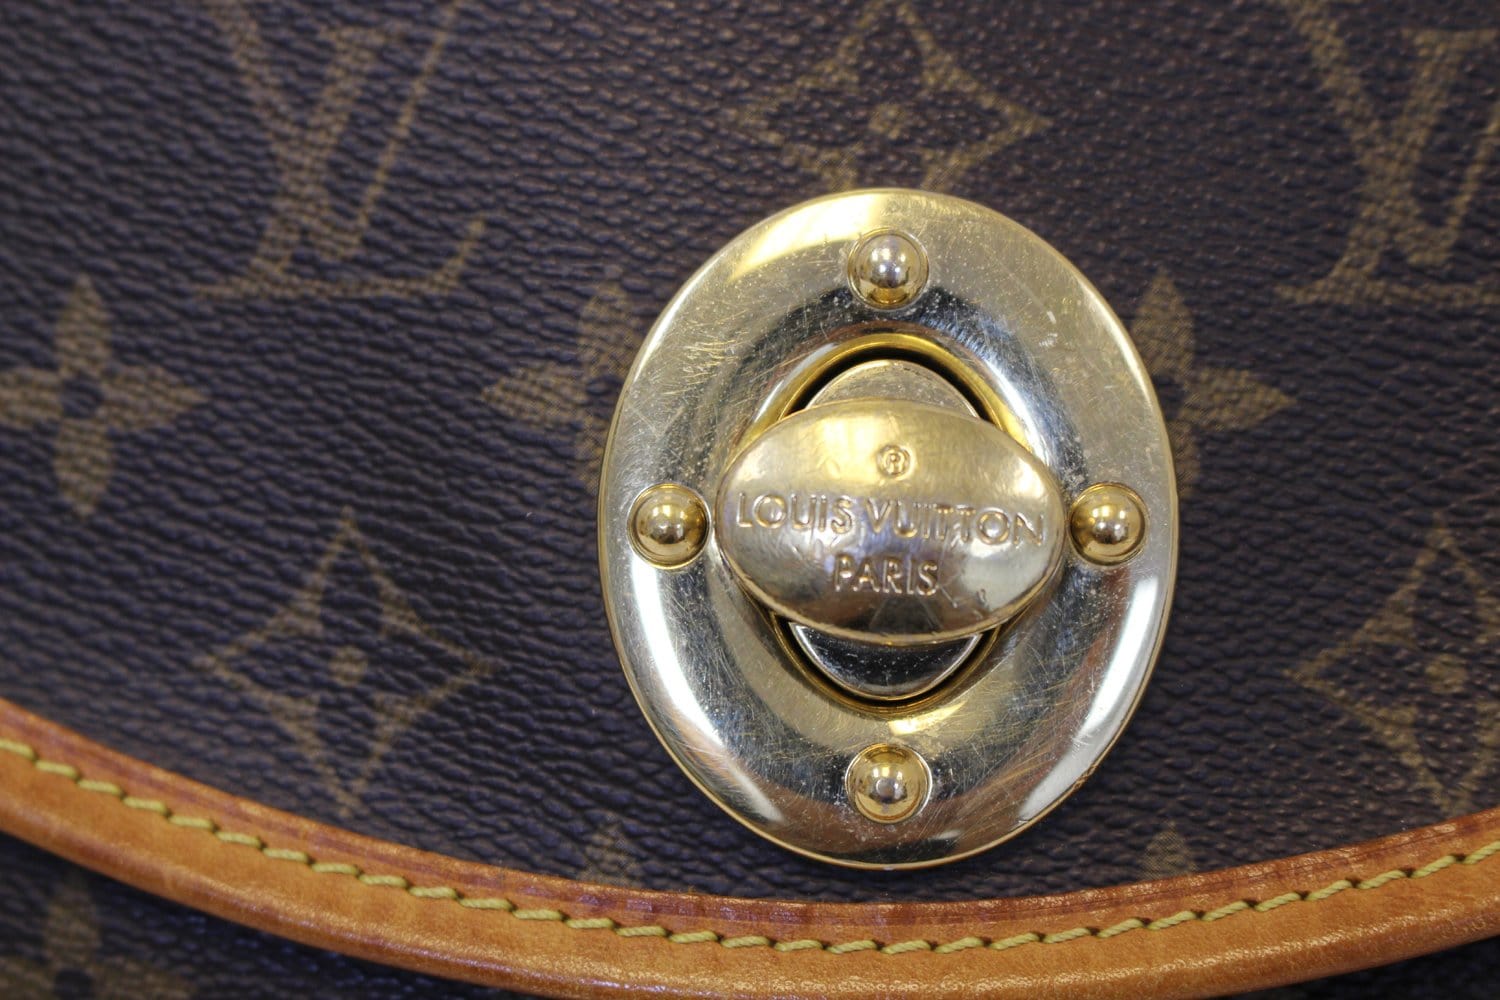 What Goes Around Comes Around Louis Vuitton Monogram Tulum GM Bag